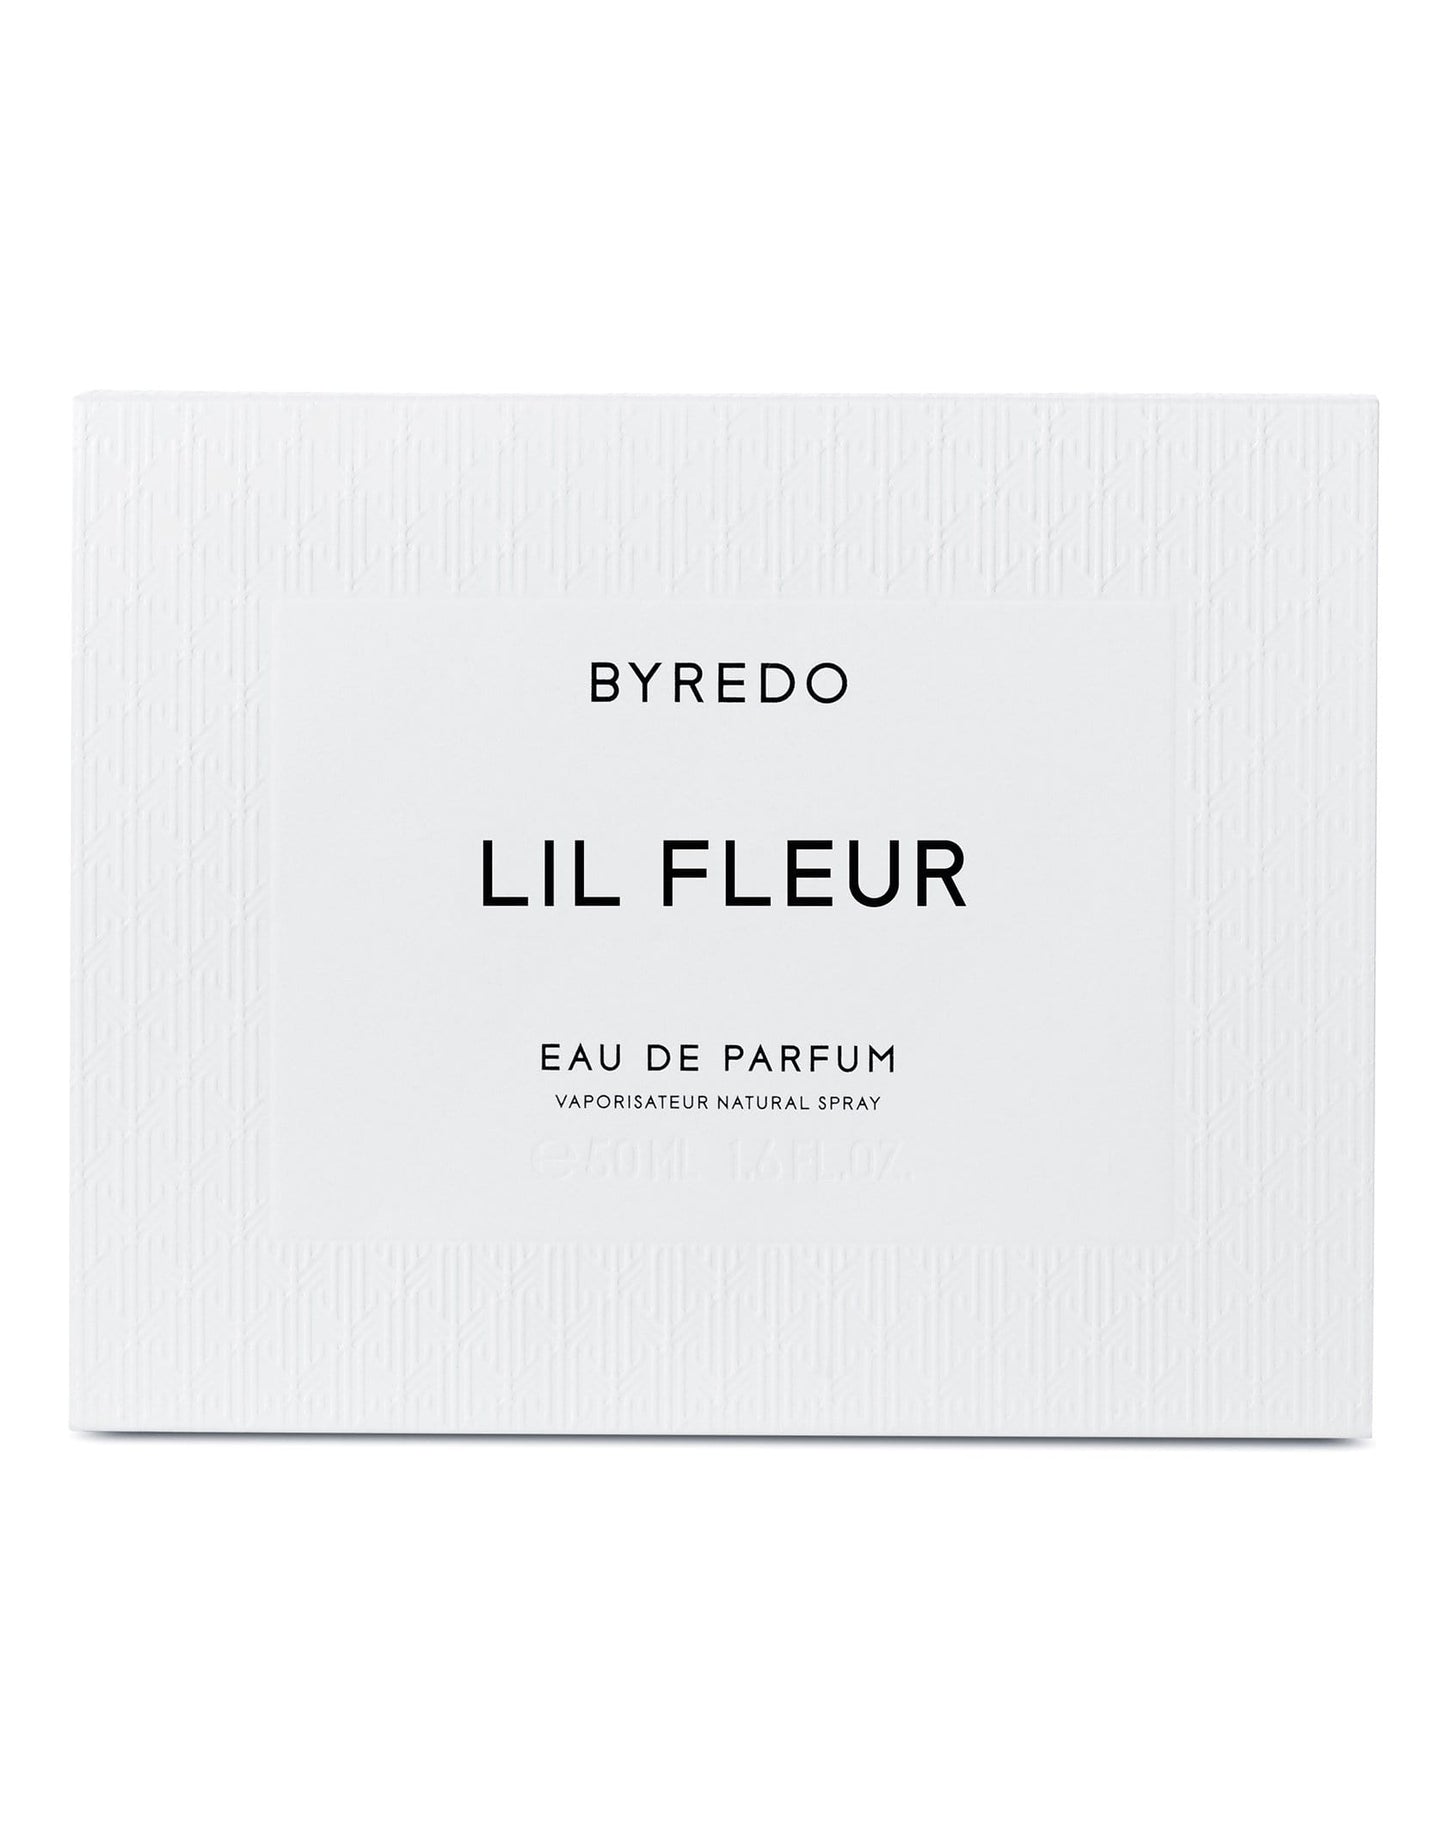 BYREDO-Lil Fleur Eau de Parfum 50ml-LILFLEUR